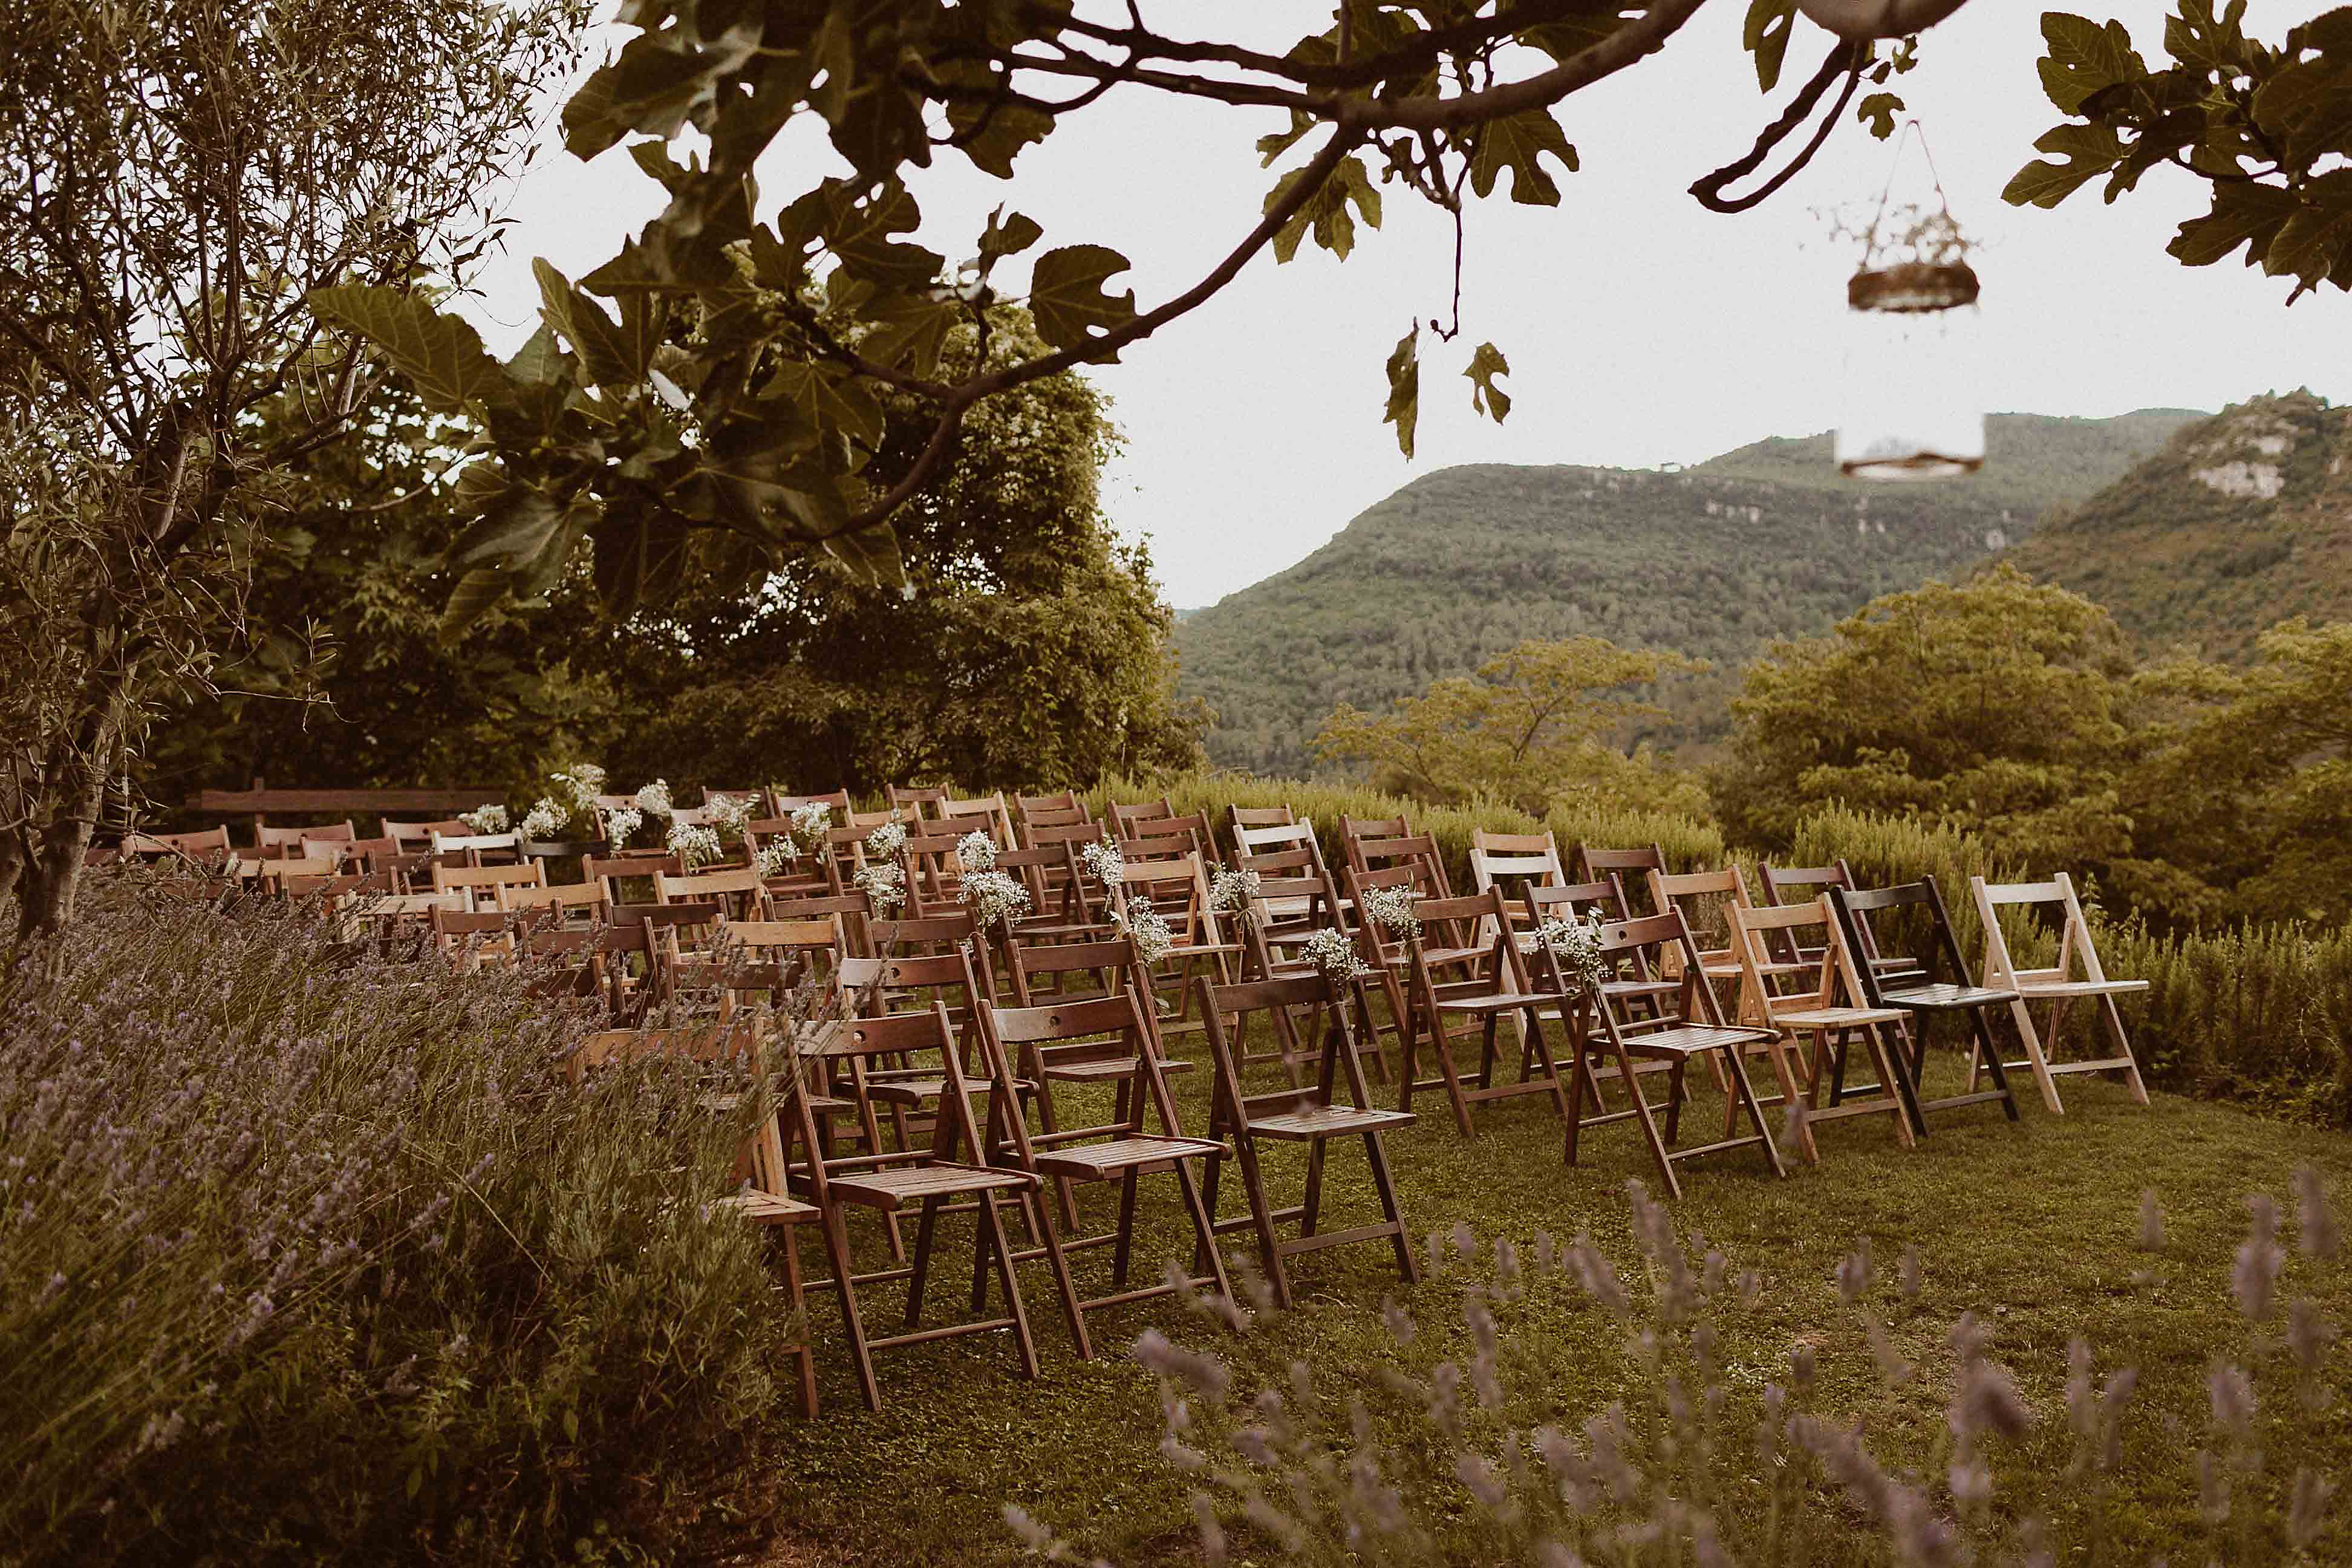 Boda rústica en la montaña. fotgrafo de bodas barcelona_010